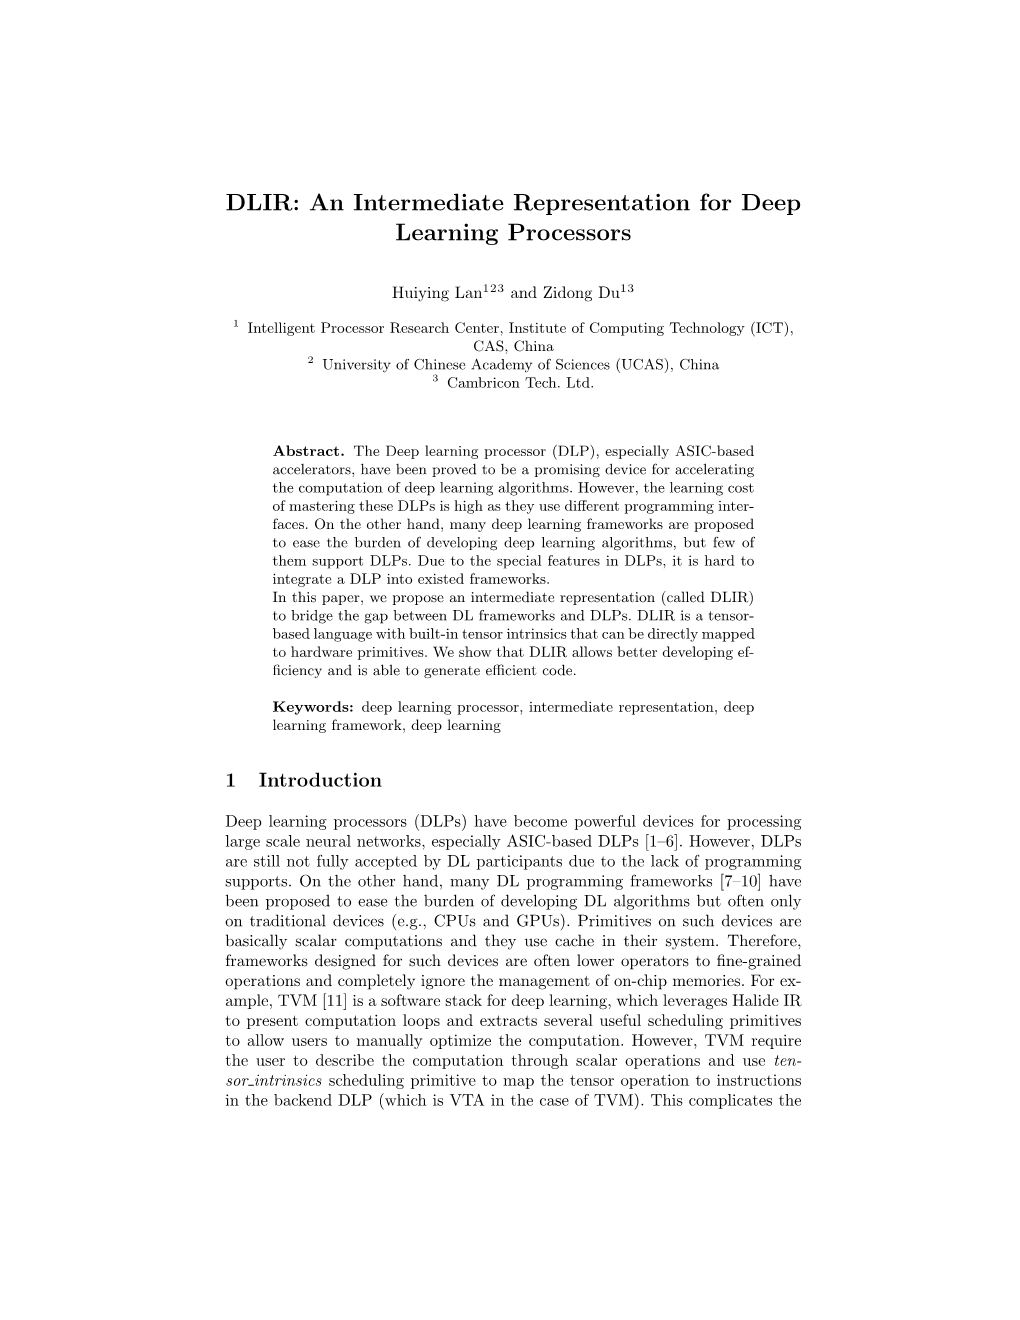 DLIR: an Intermediate Representation for Deep Learning Processors